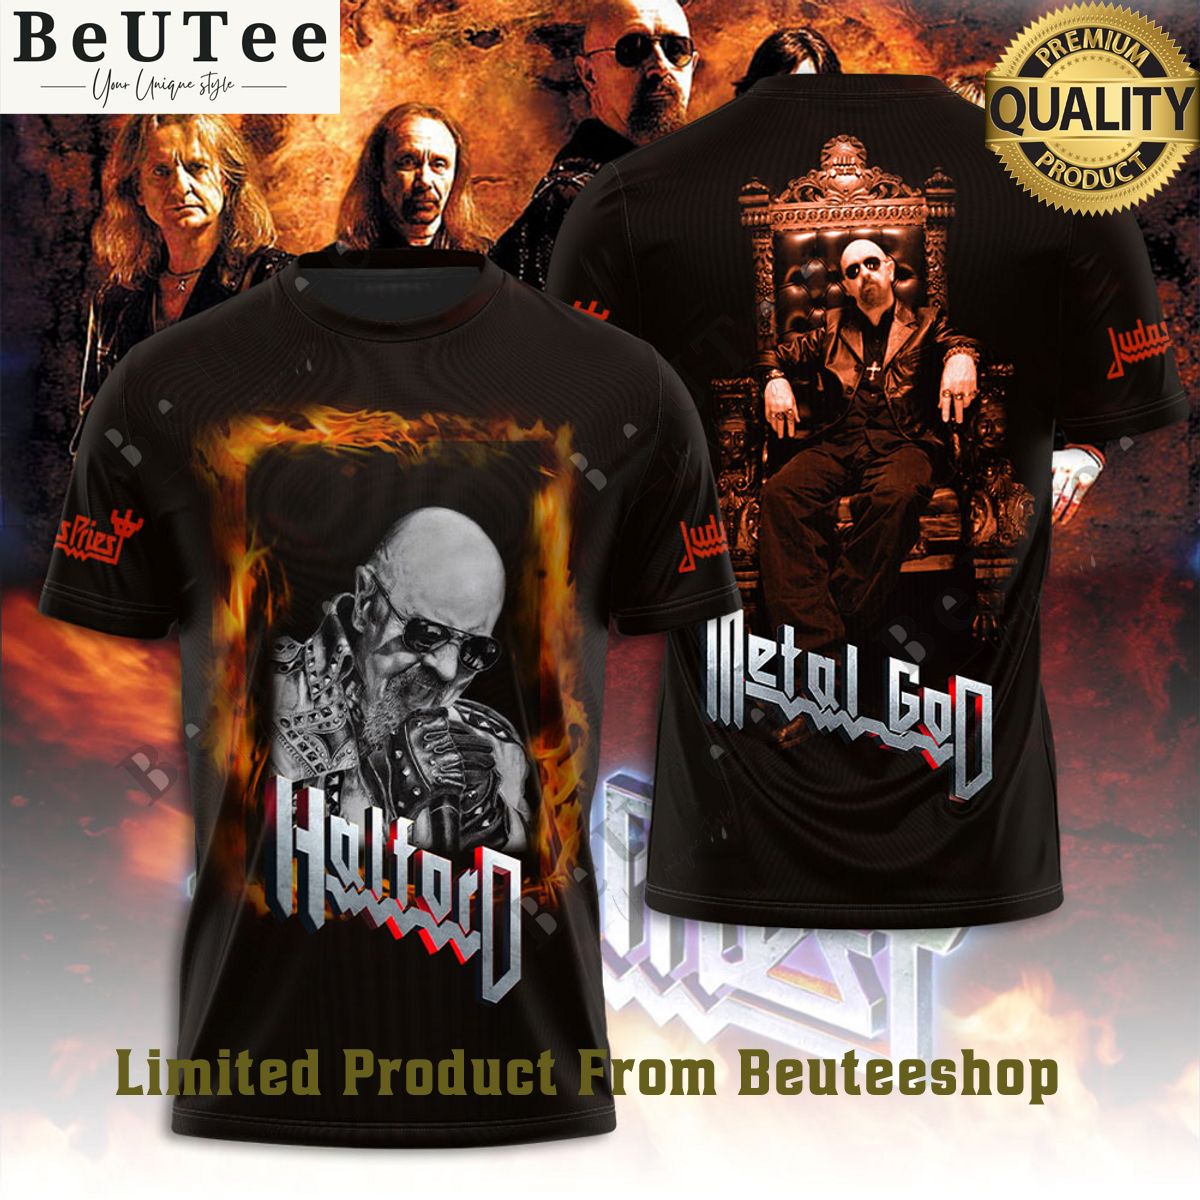 judas priest halford metal god 3d t shirt 1 hw85k.jpg